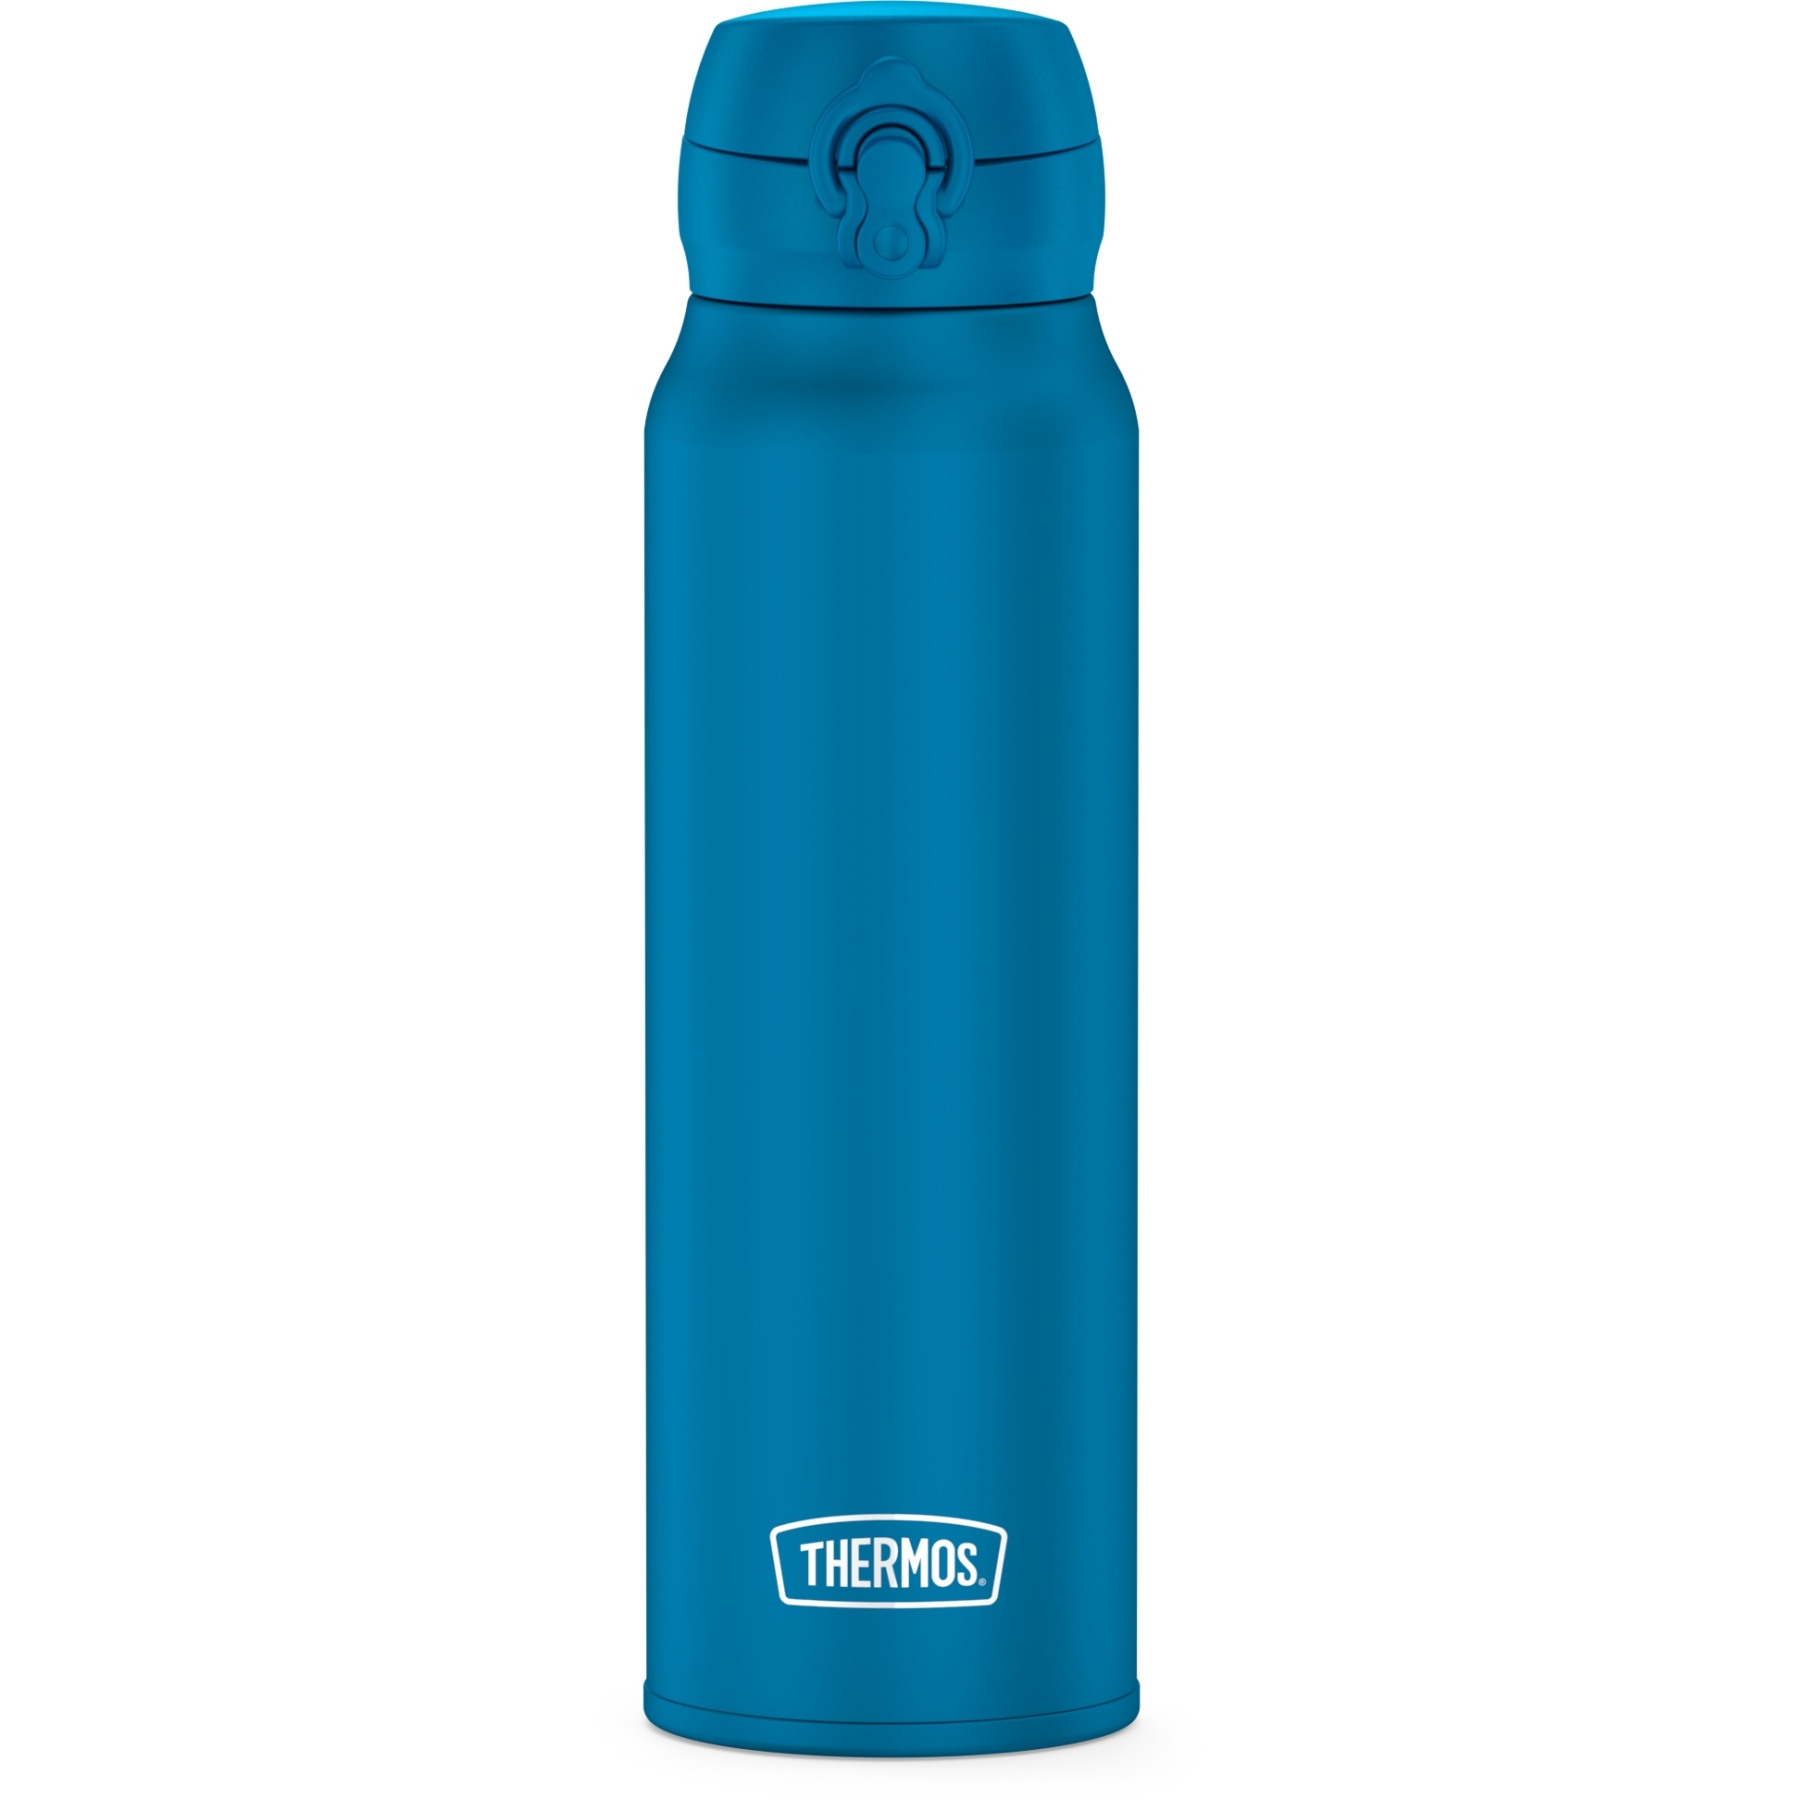 Productfoto van THERMOS® Ultralight Bottle 0.75L - azure water mat